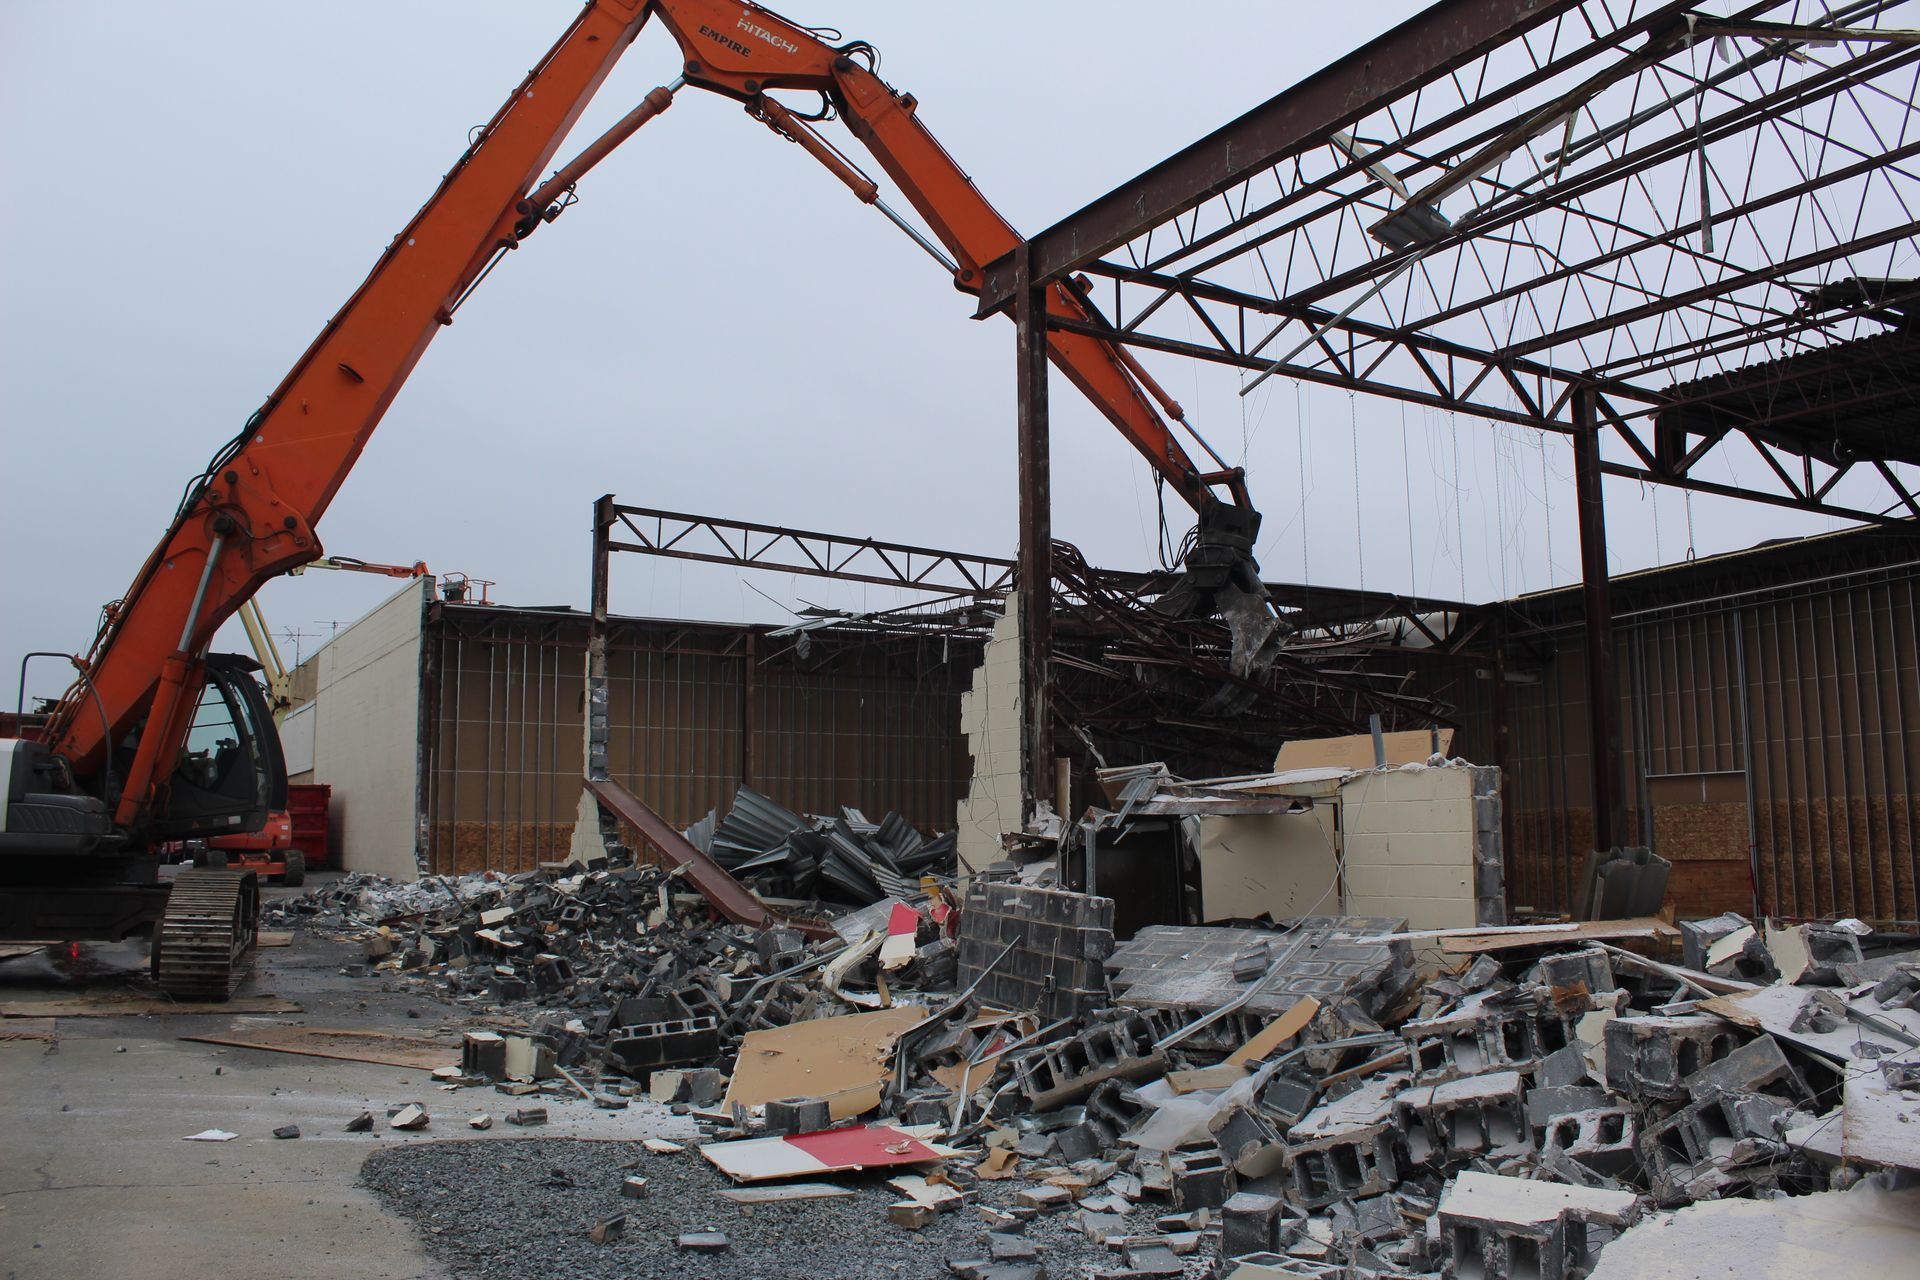 A large orange excavator is demolishing a building